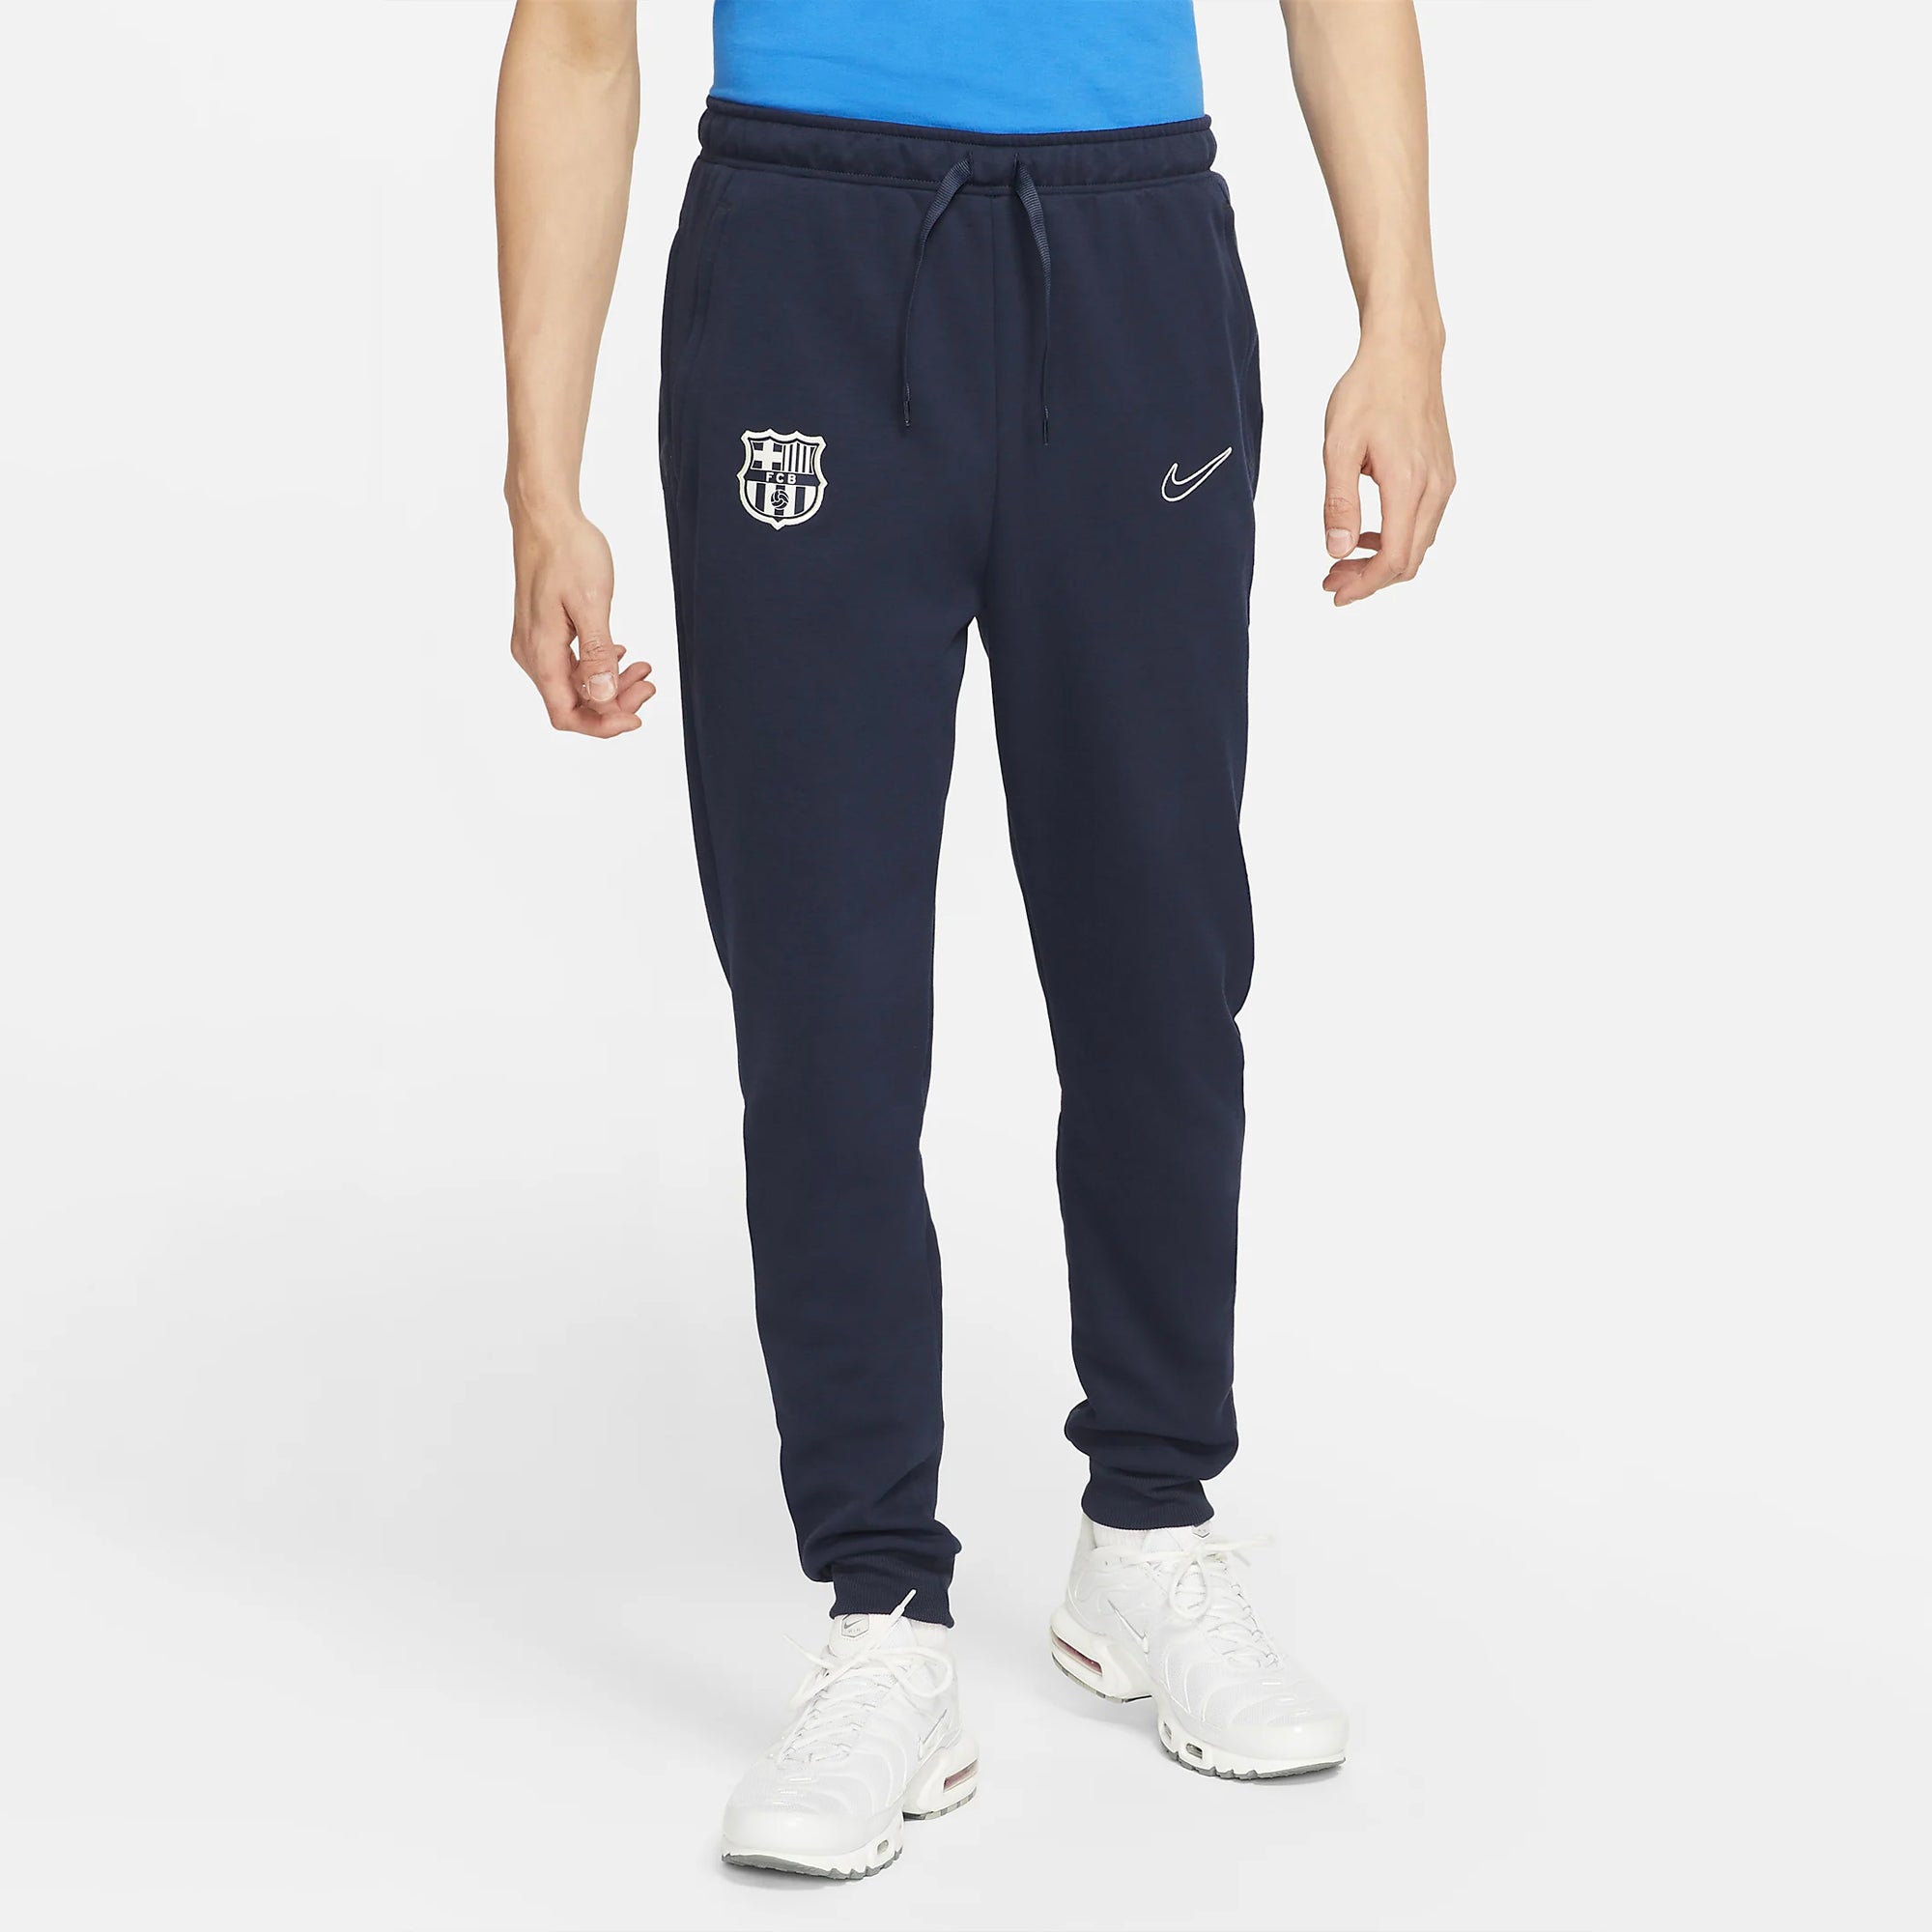 Fc Barcelona Men's Dri-FIT Soccer Pants